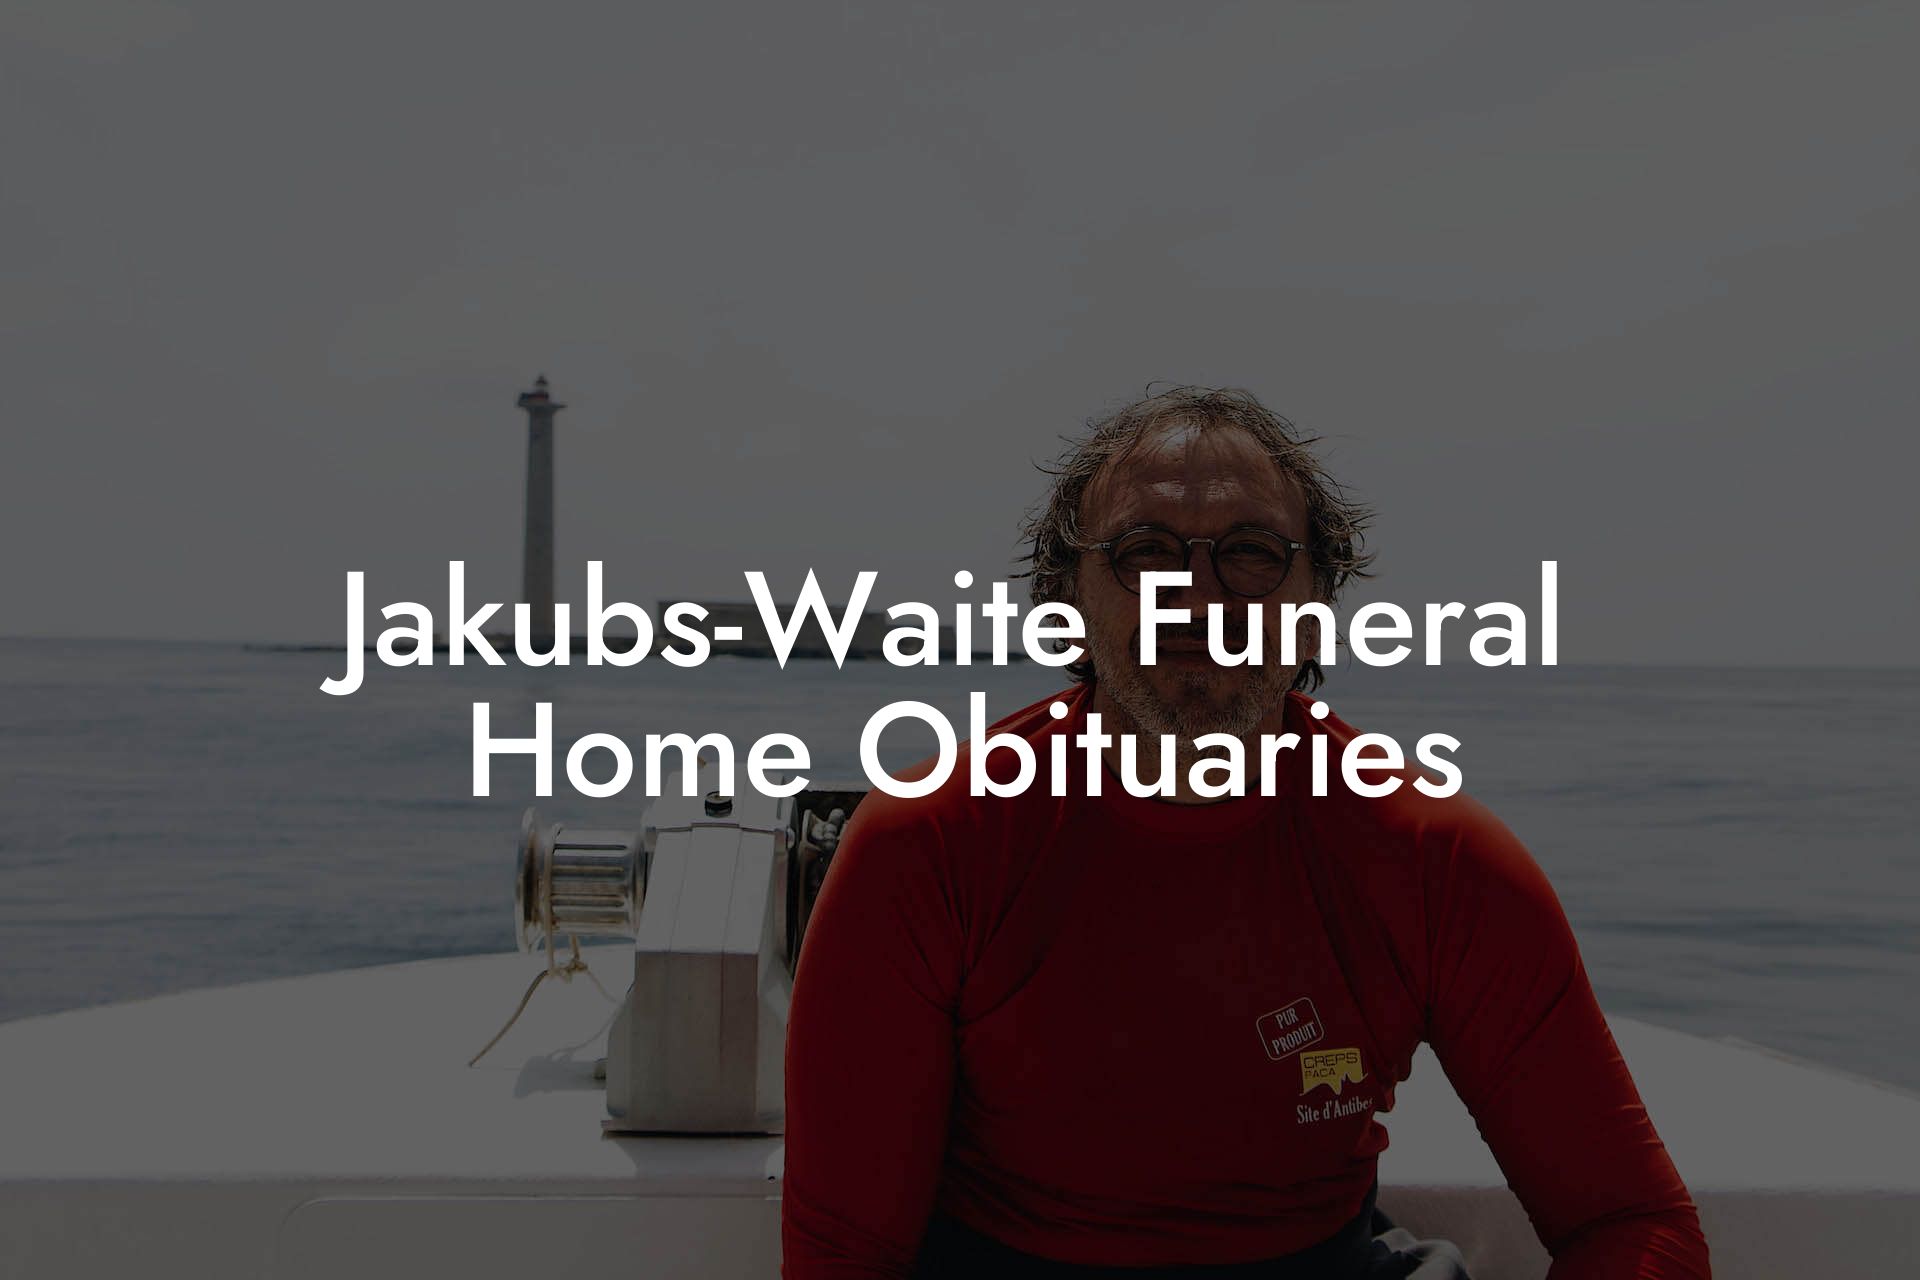 Jakubs-Waite Funeral Home Obituaries